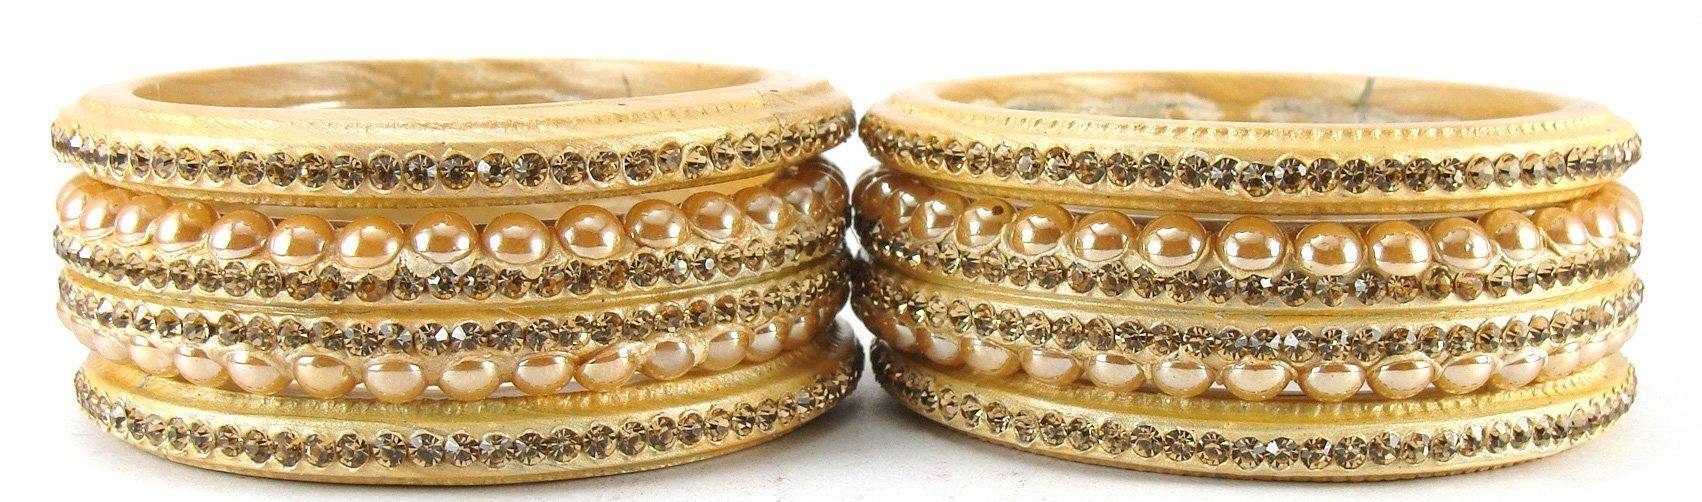 sukriti rajasthani wedding beige lac bangles for women - set of 6